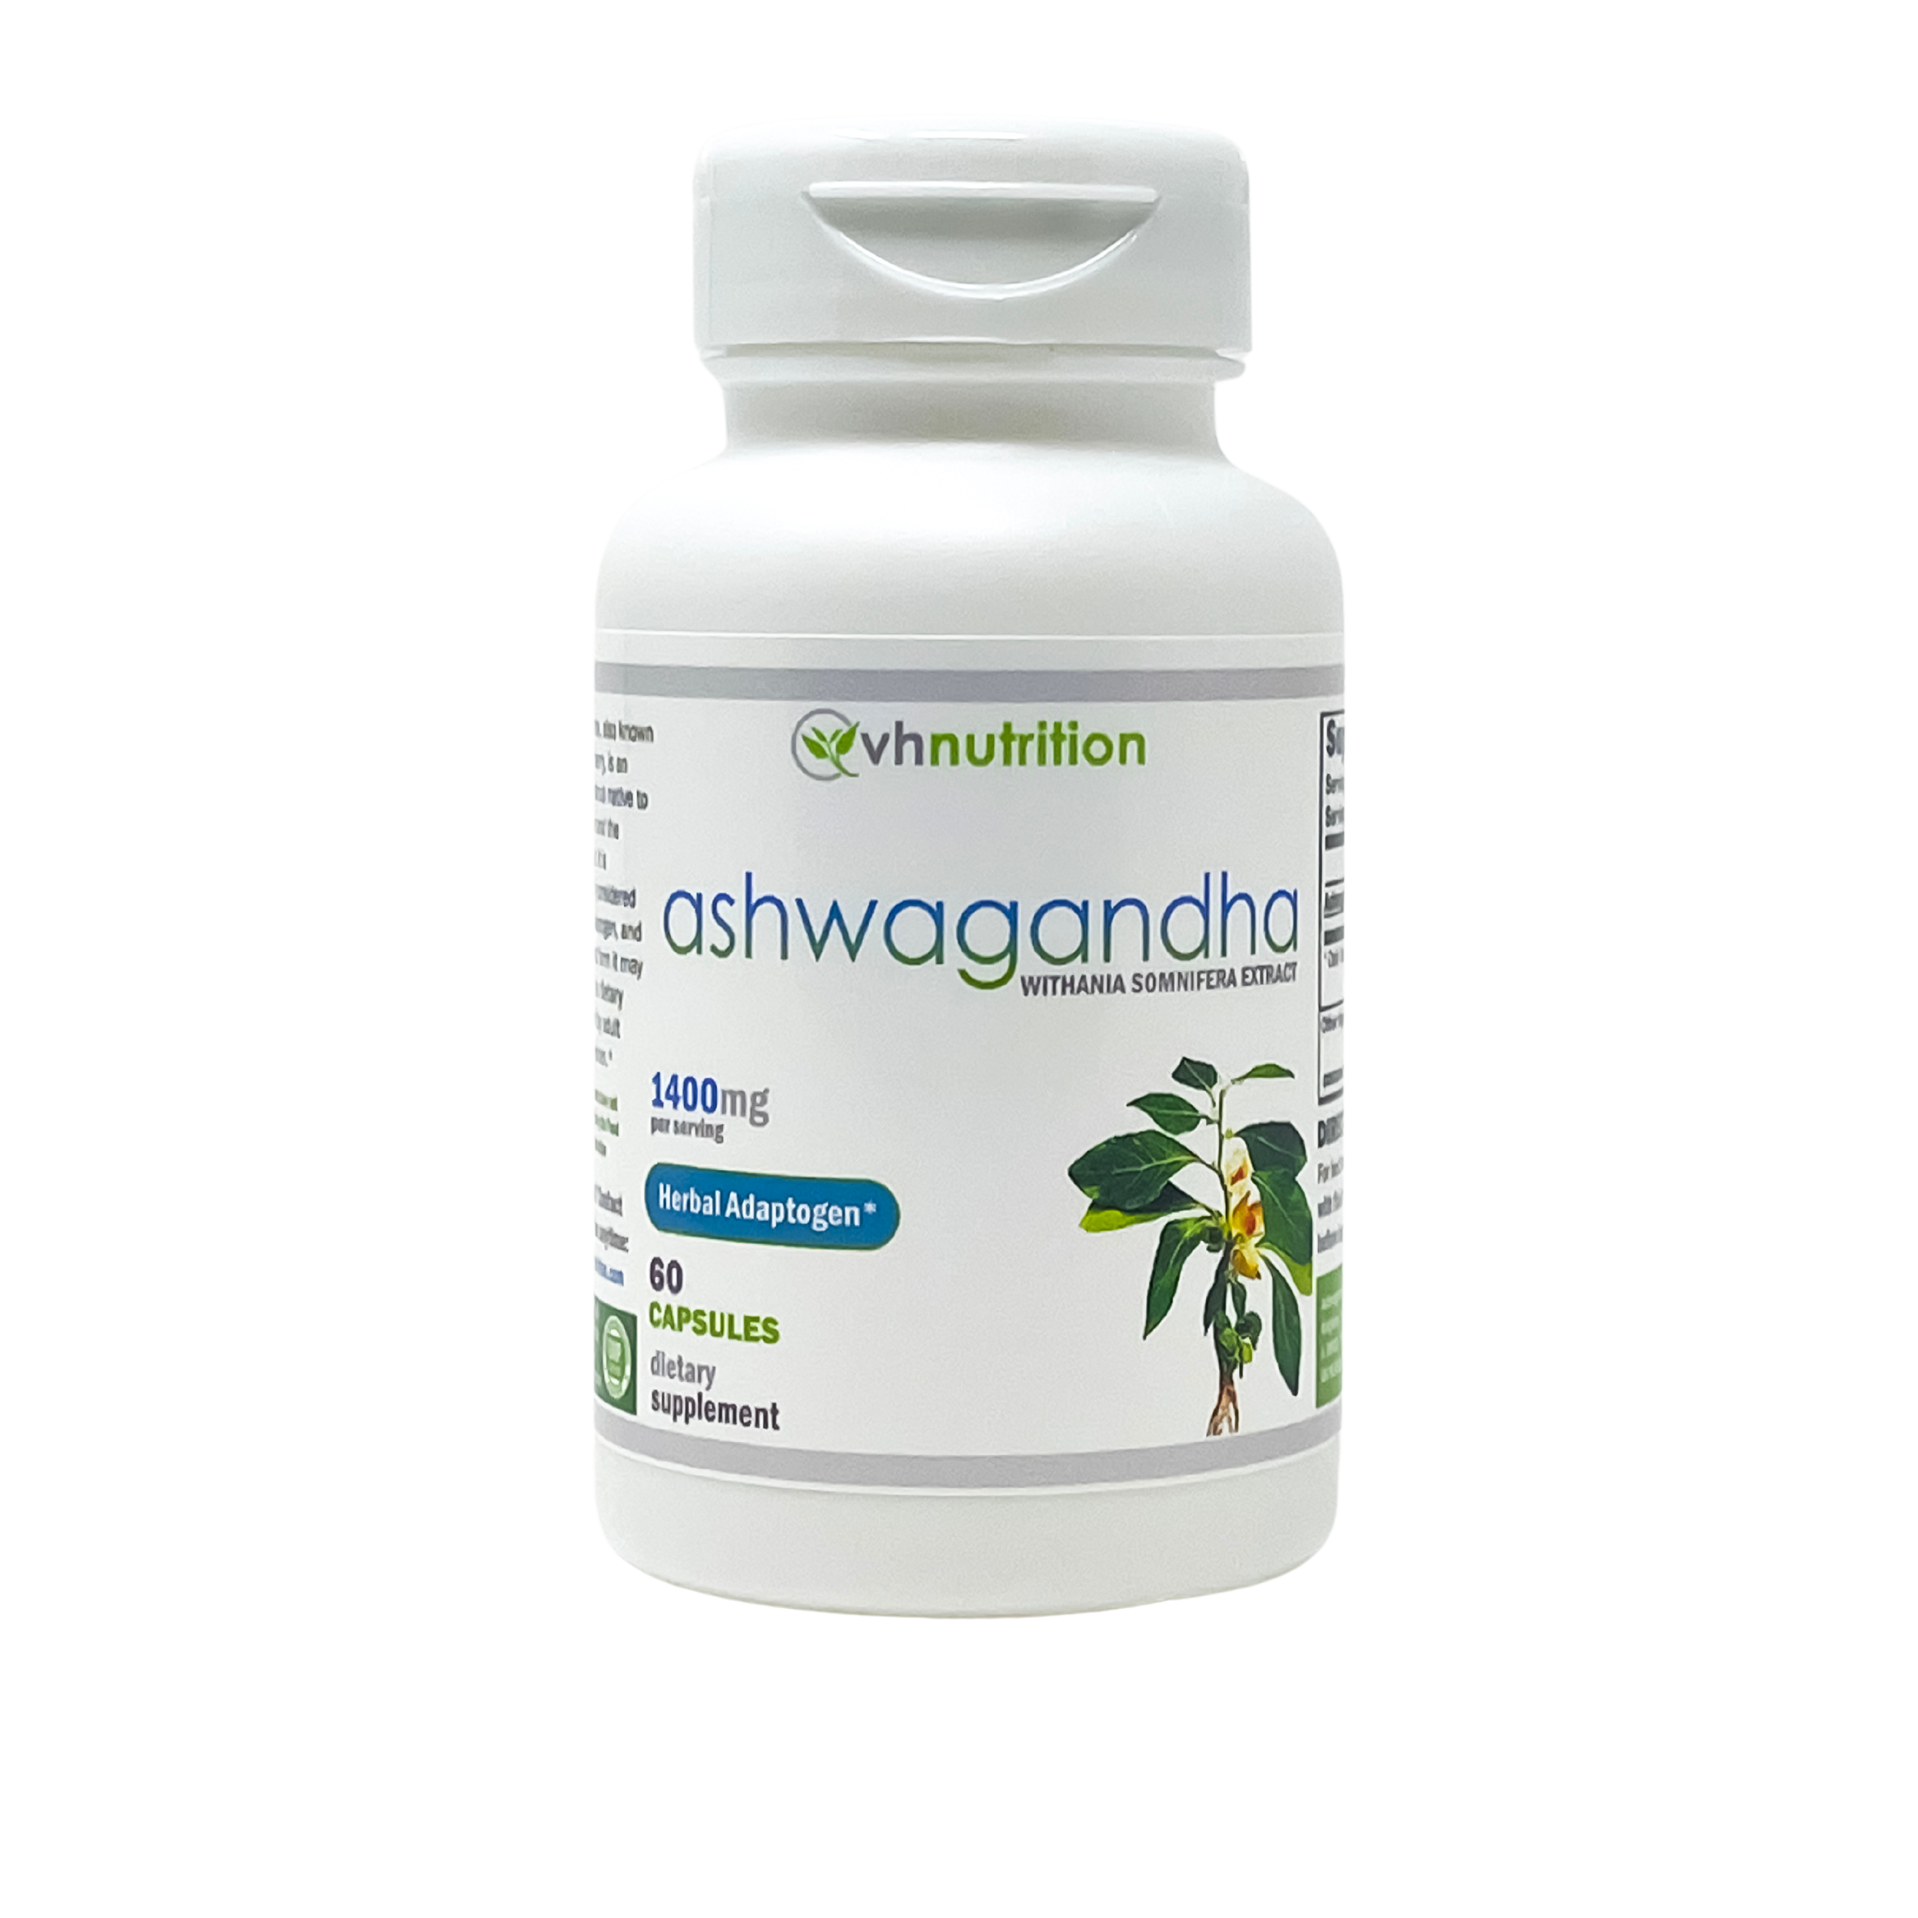 VH Nutrition ASHWAGANDHA | Withania somnifera Capsules | Herbal Adaptogen Supplement for Men & Women* | 1400mg per serving 60 Capsules | Standardized Ashwagandha Extract Powder